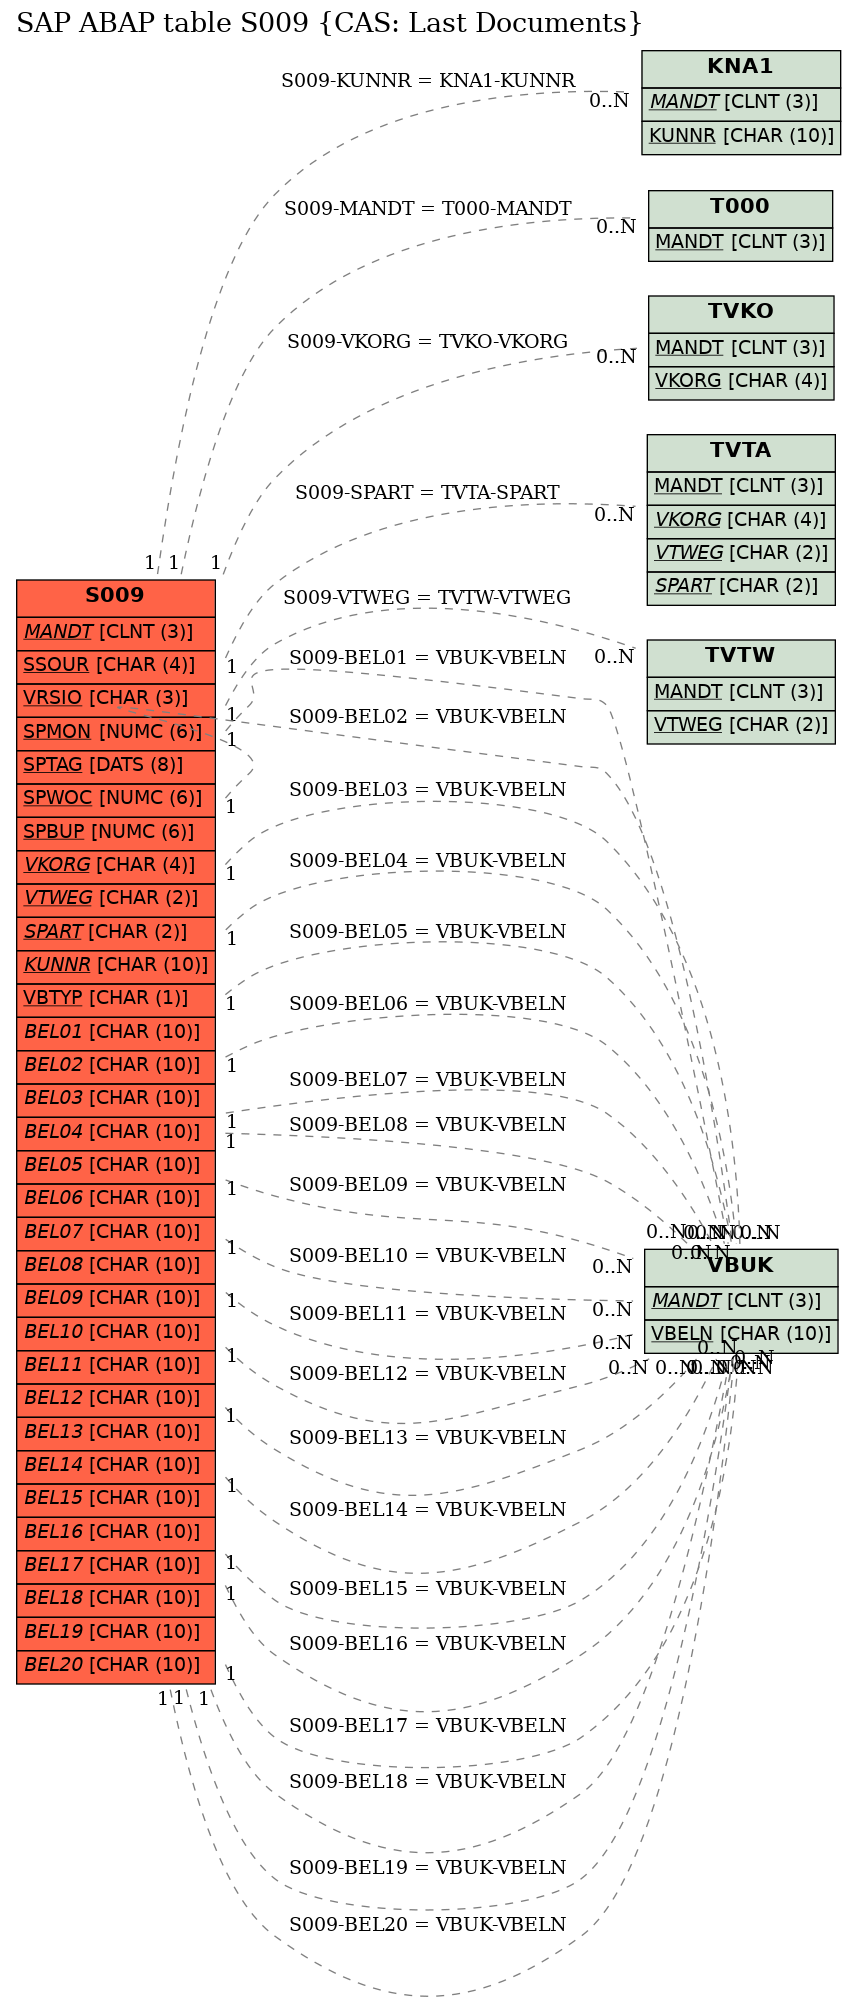 E-R Diagram for table S009 (CAS: Last Documents)